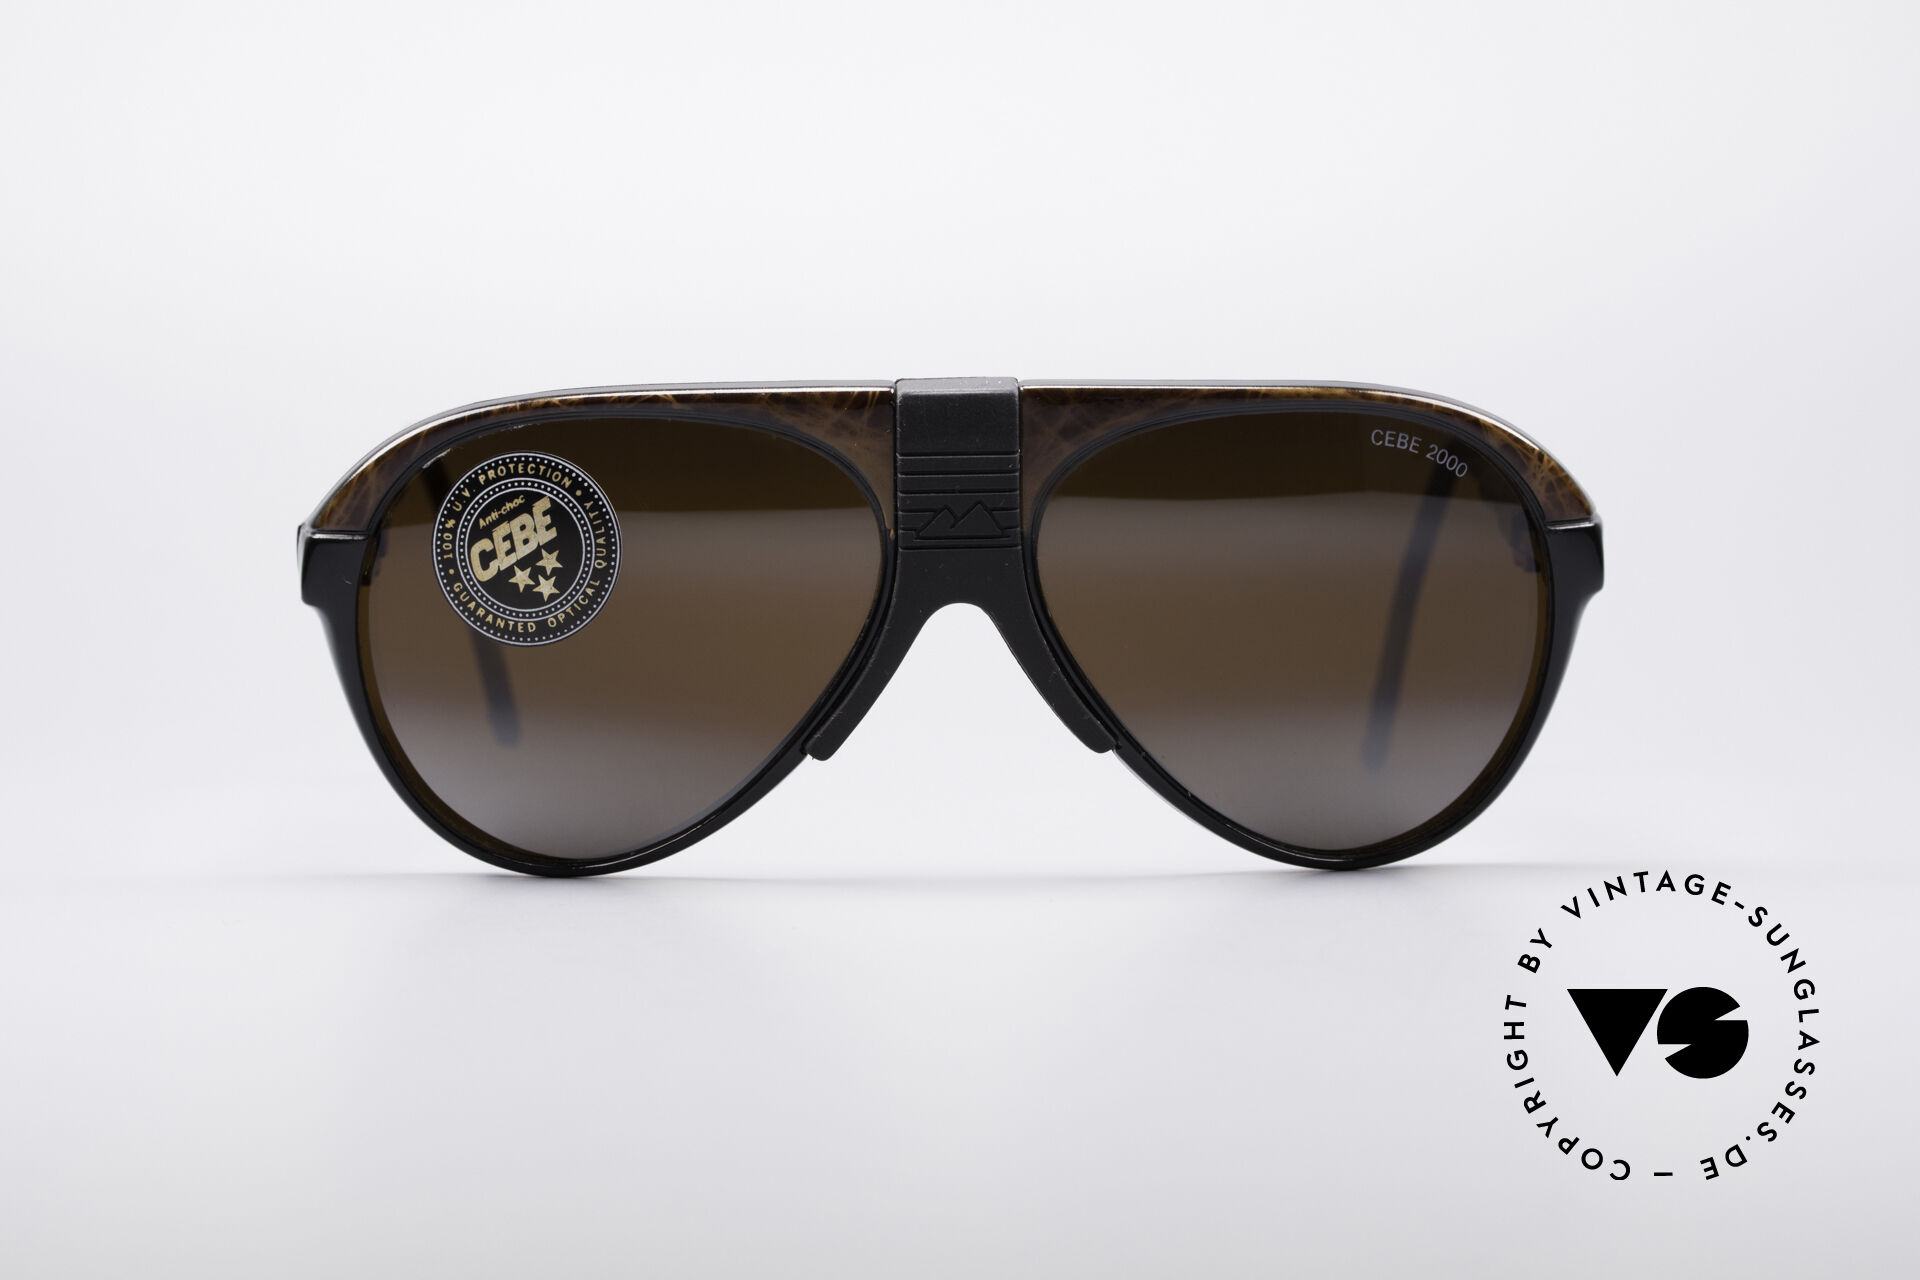 Sunglasses Cebe 1959 Racing Sunglasses